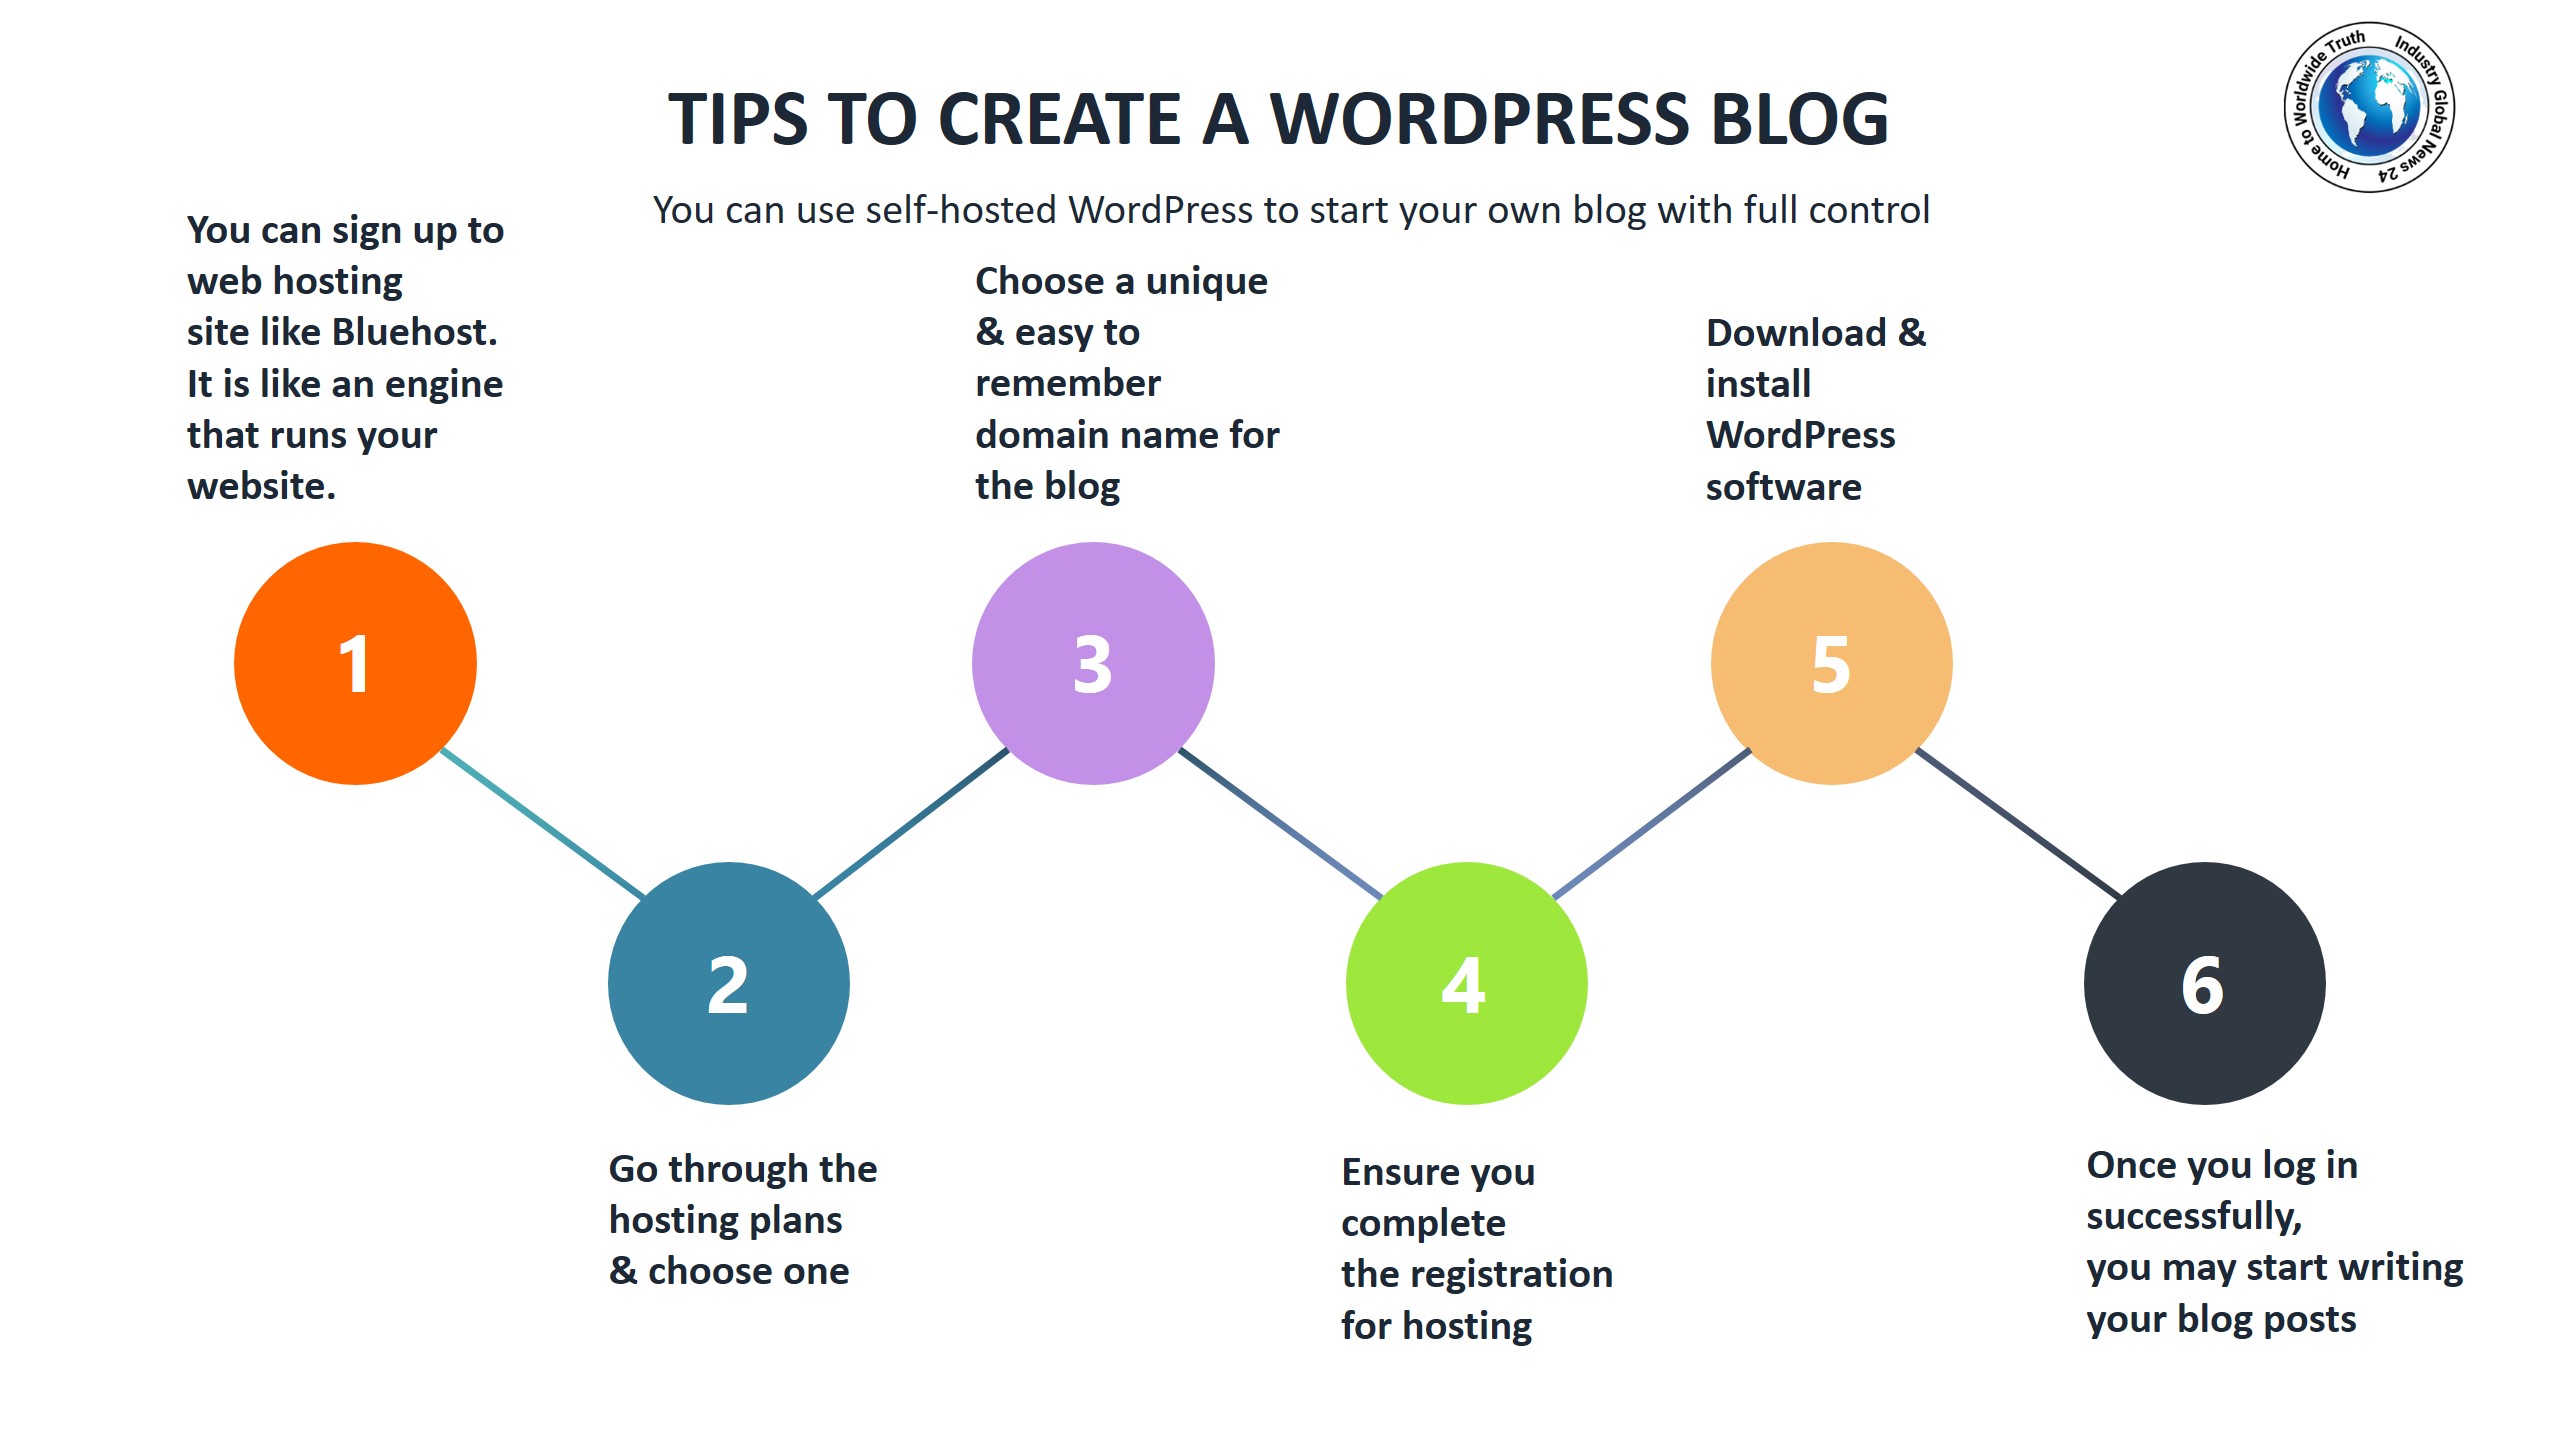 Tips to create a WordPress blog